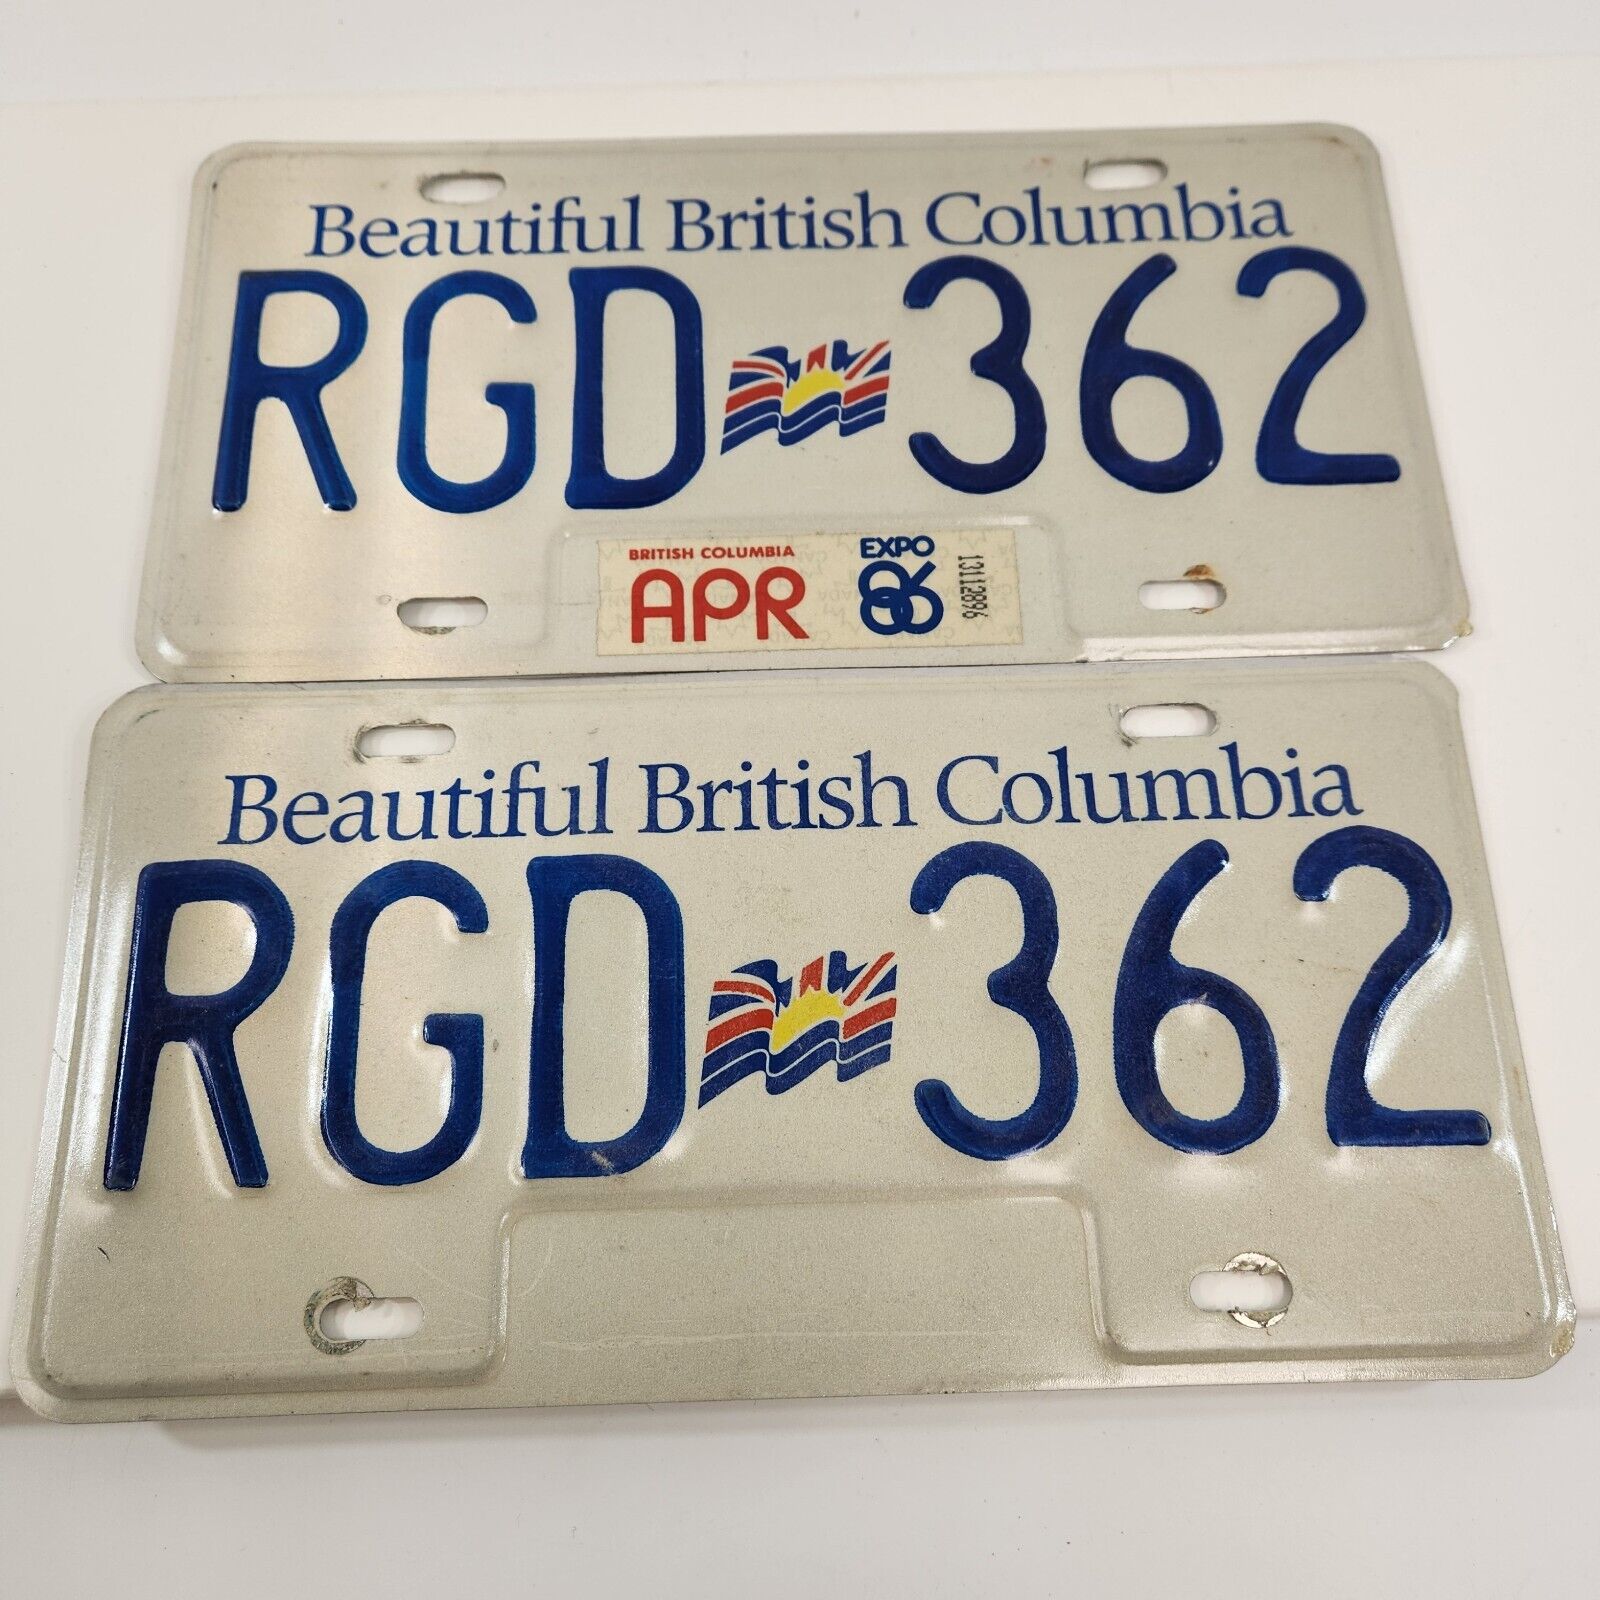 Beautiful British Columbia License Plate Matching Pair Expo RGD 362 Expired 1986